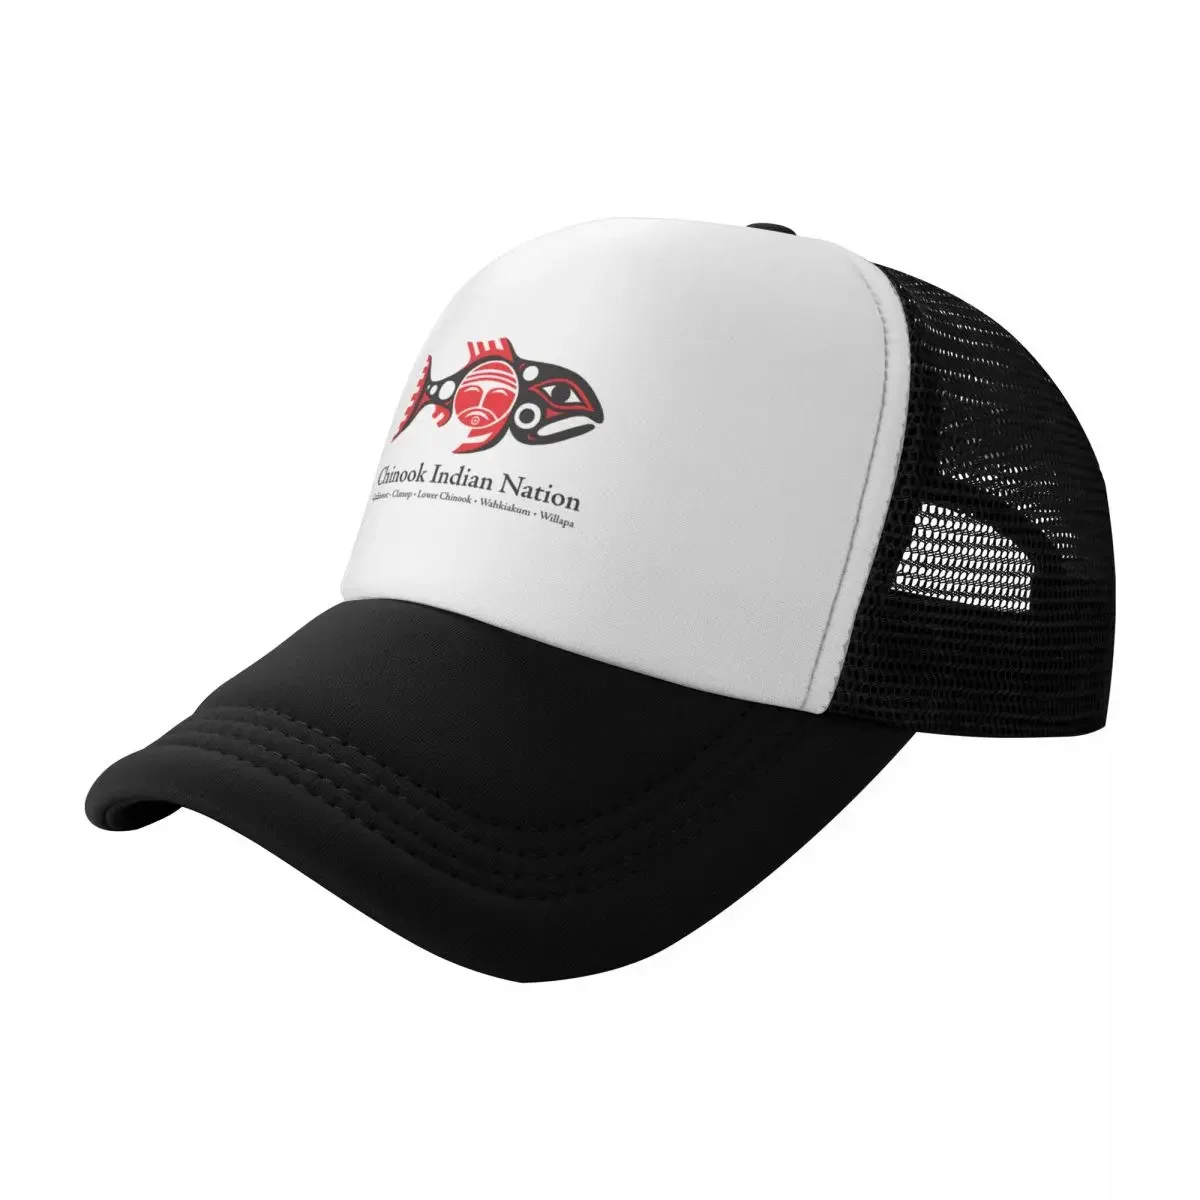 

Chinook Indian Nation Tribal Logo, horizontal Baseball Cap Cosplay Rugby Trucker Hats For Men Women's